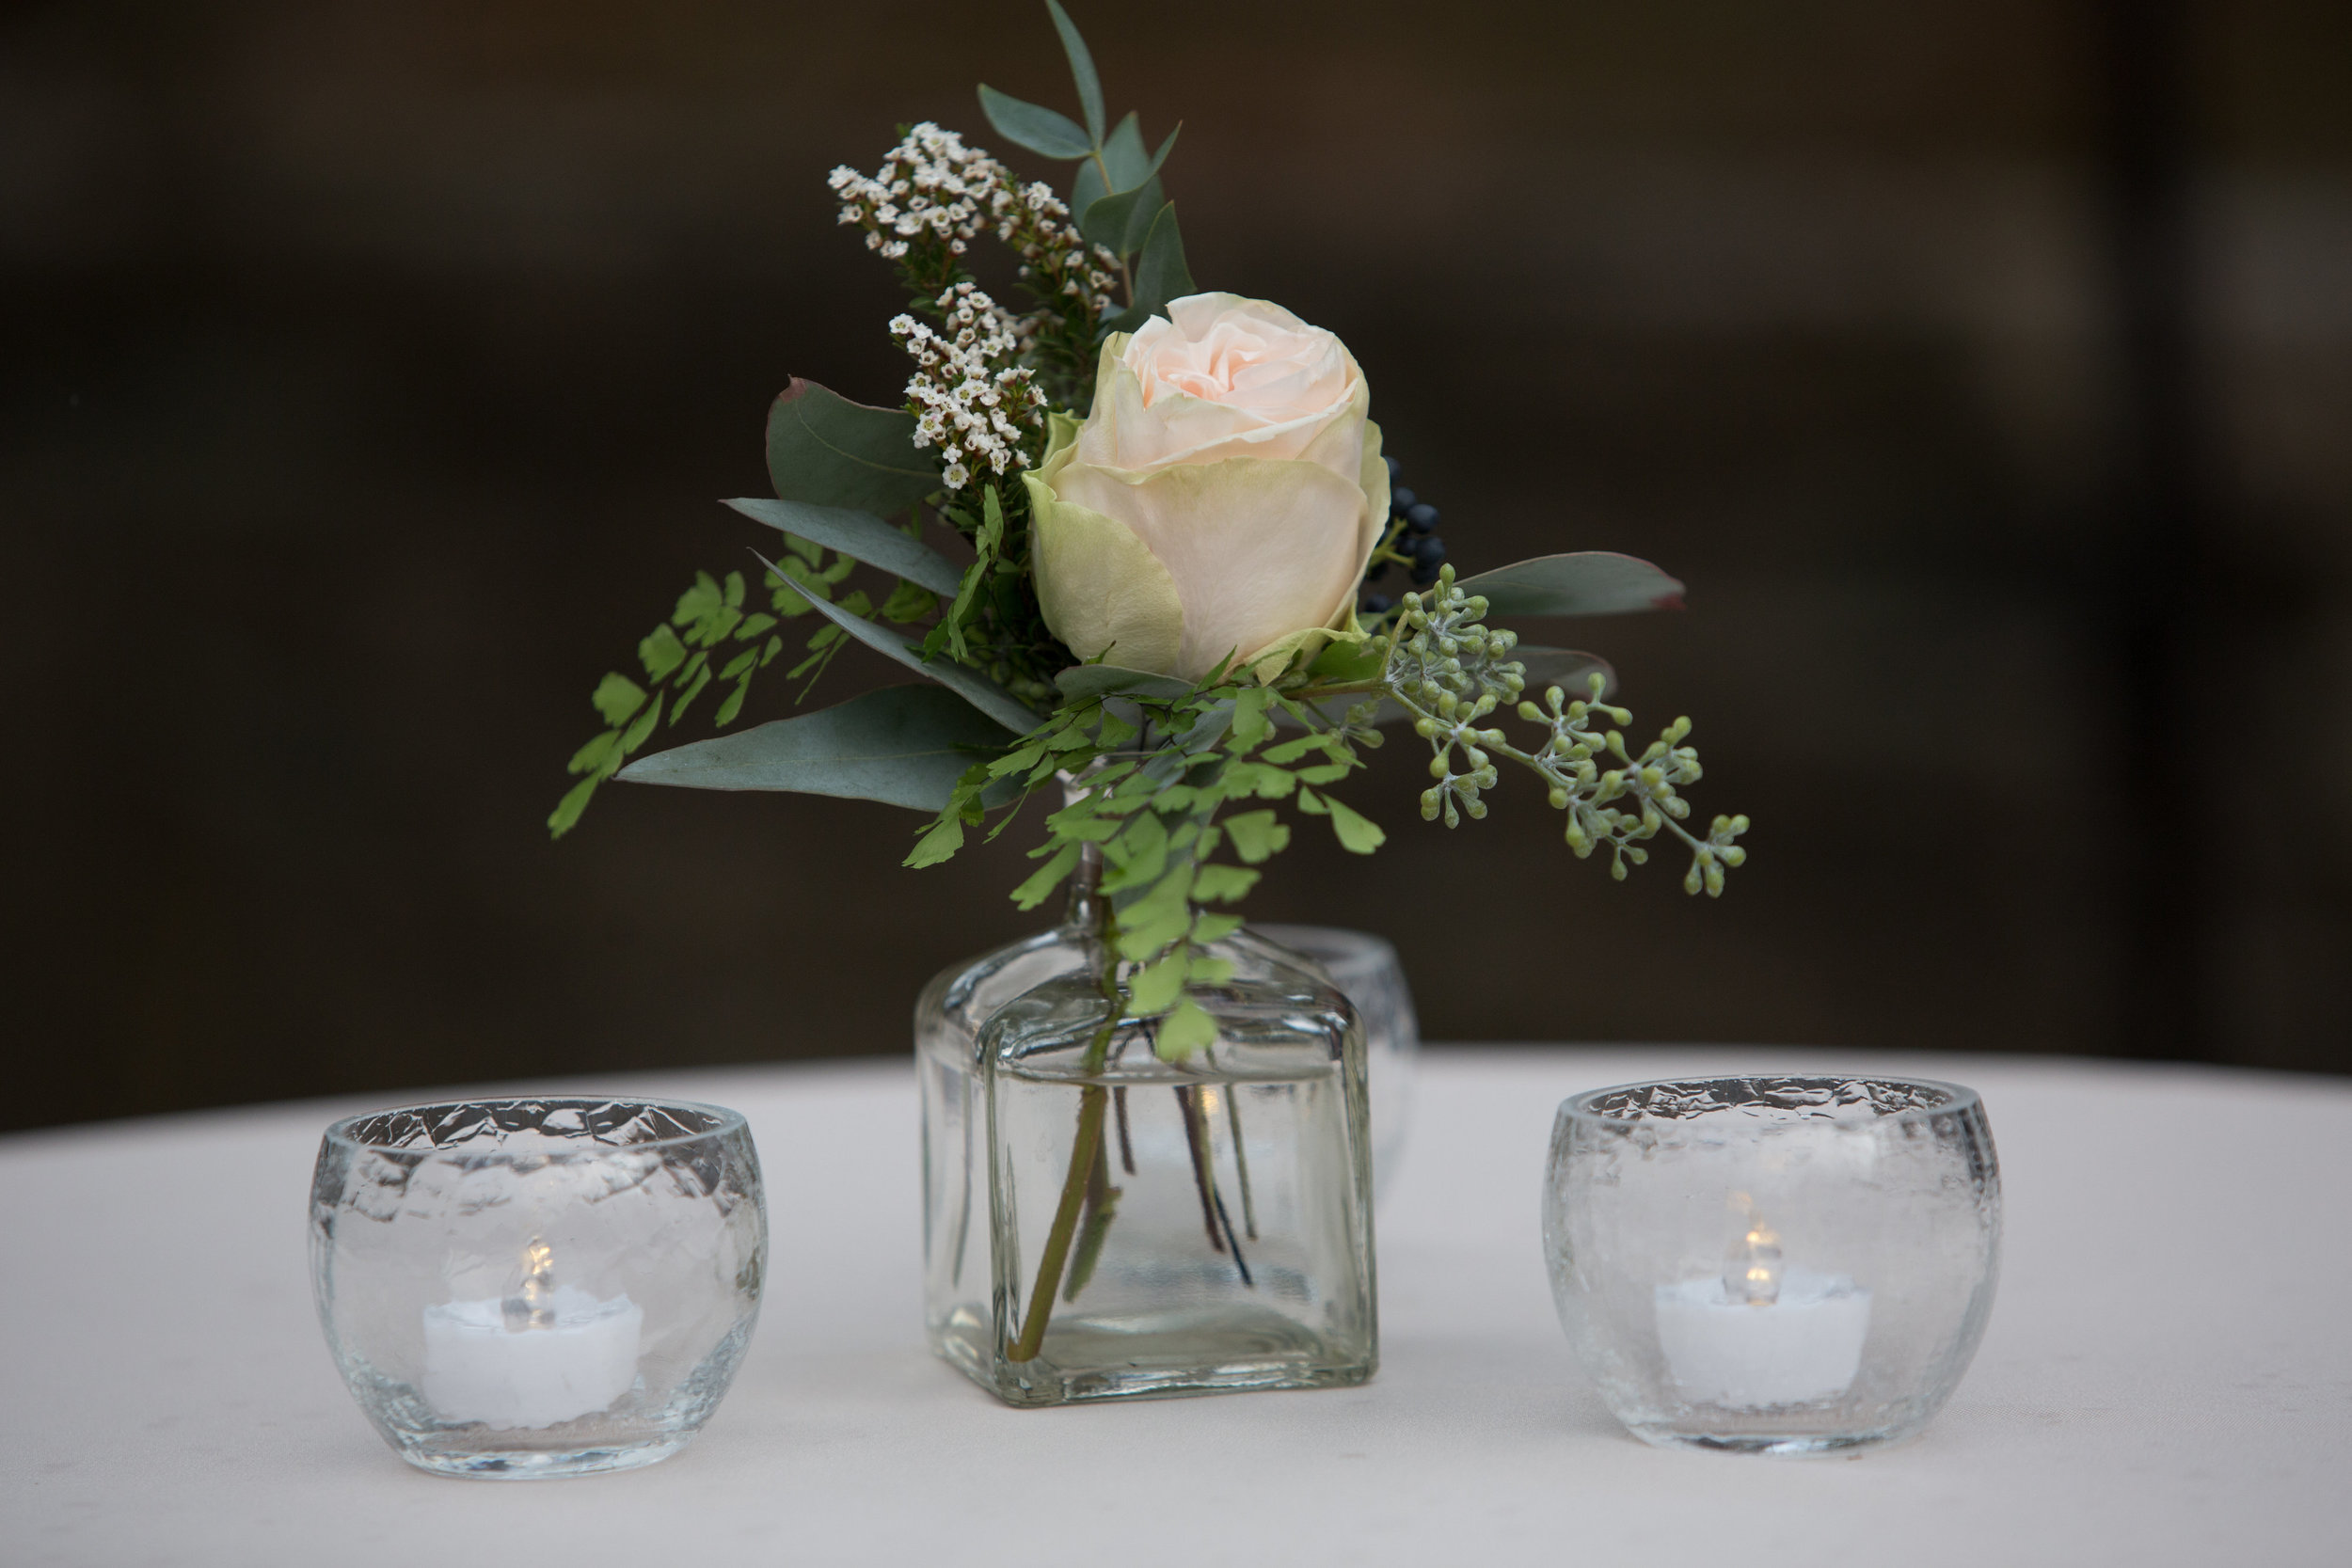 Maidenhair fern and garden rose bud vase // Nashville Florist